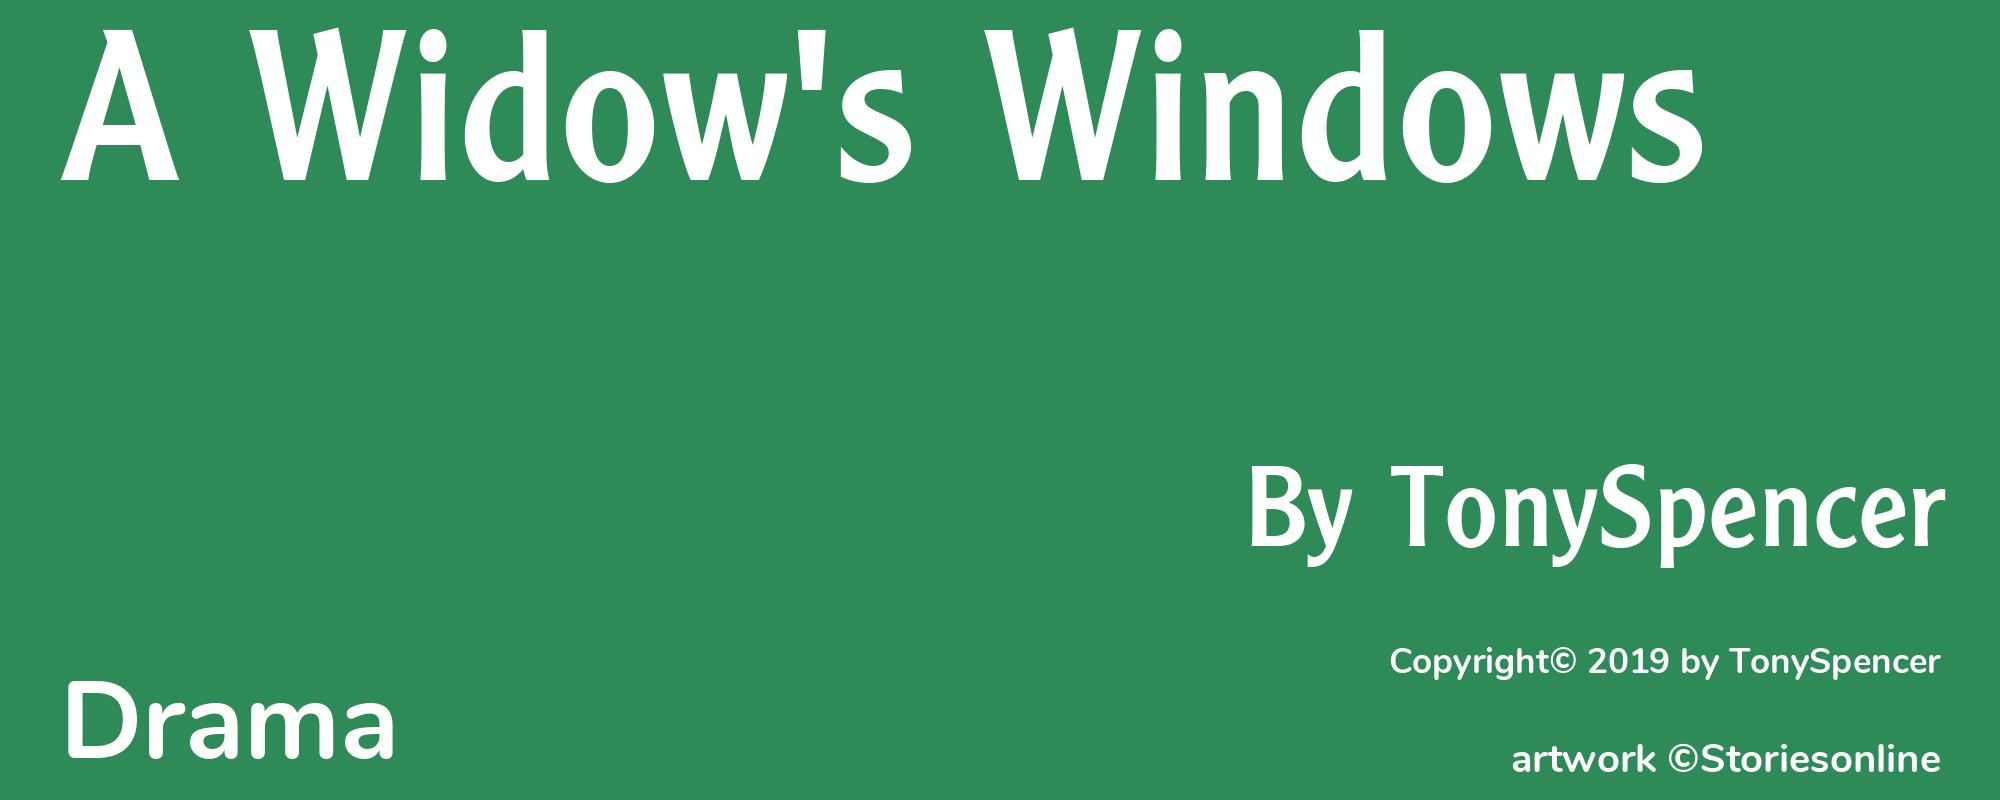 A Widow's Windows - Cover